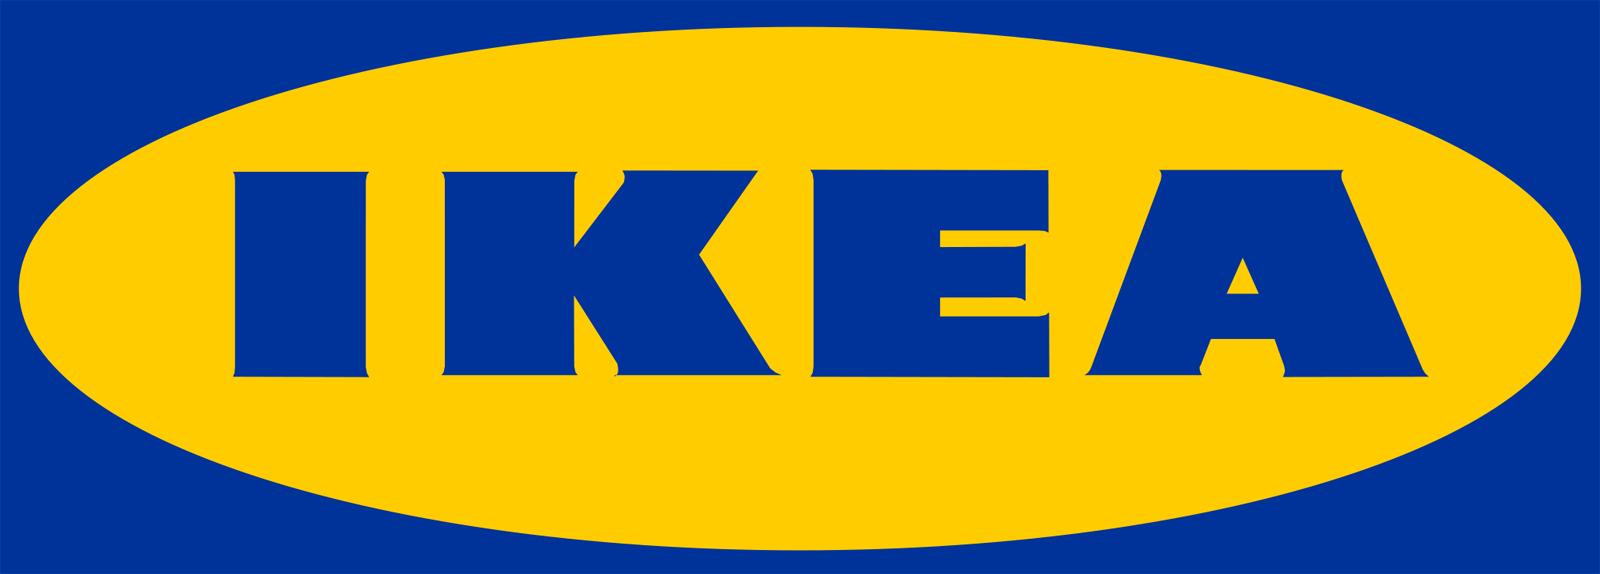 persianas inteligentes IKEA